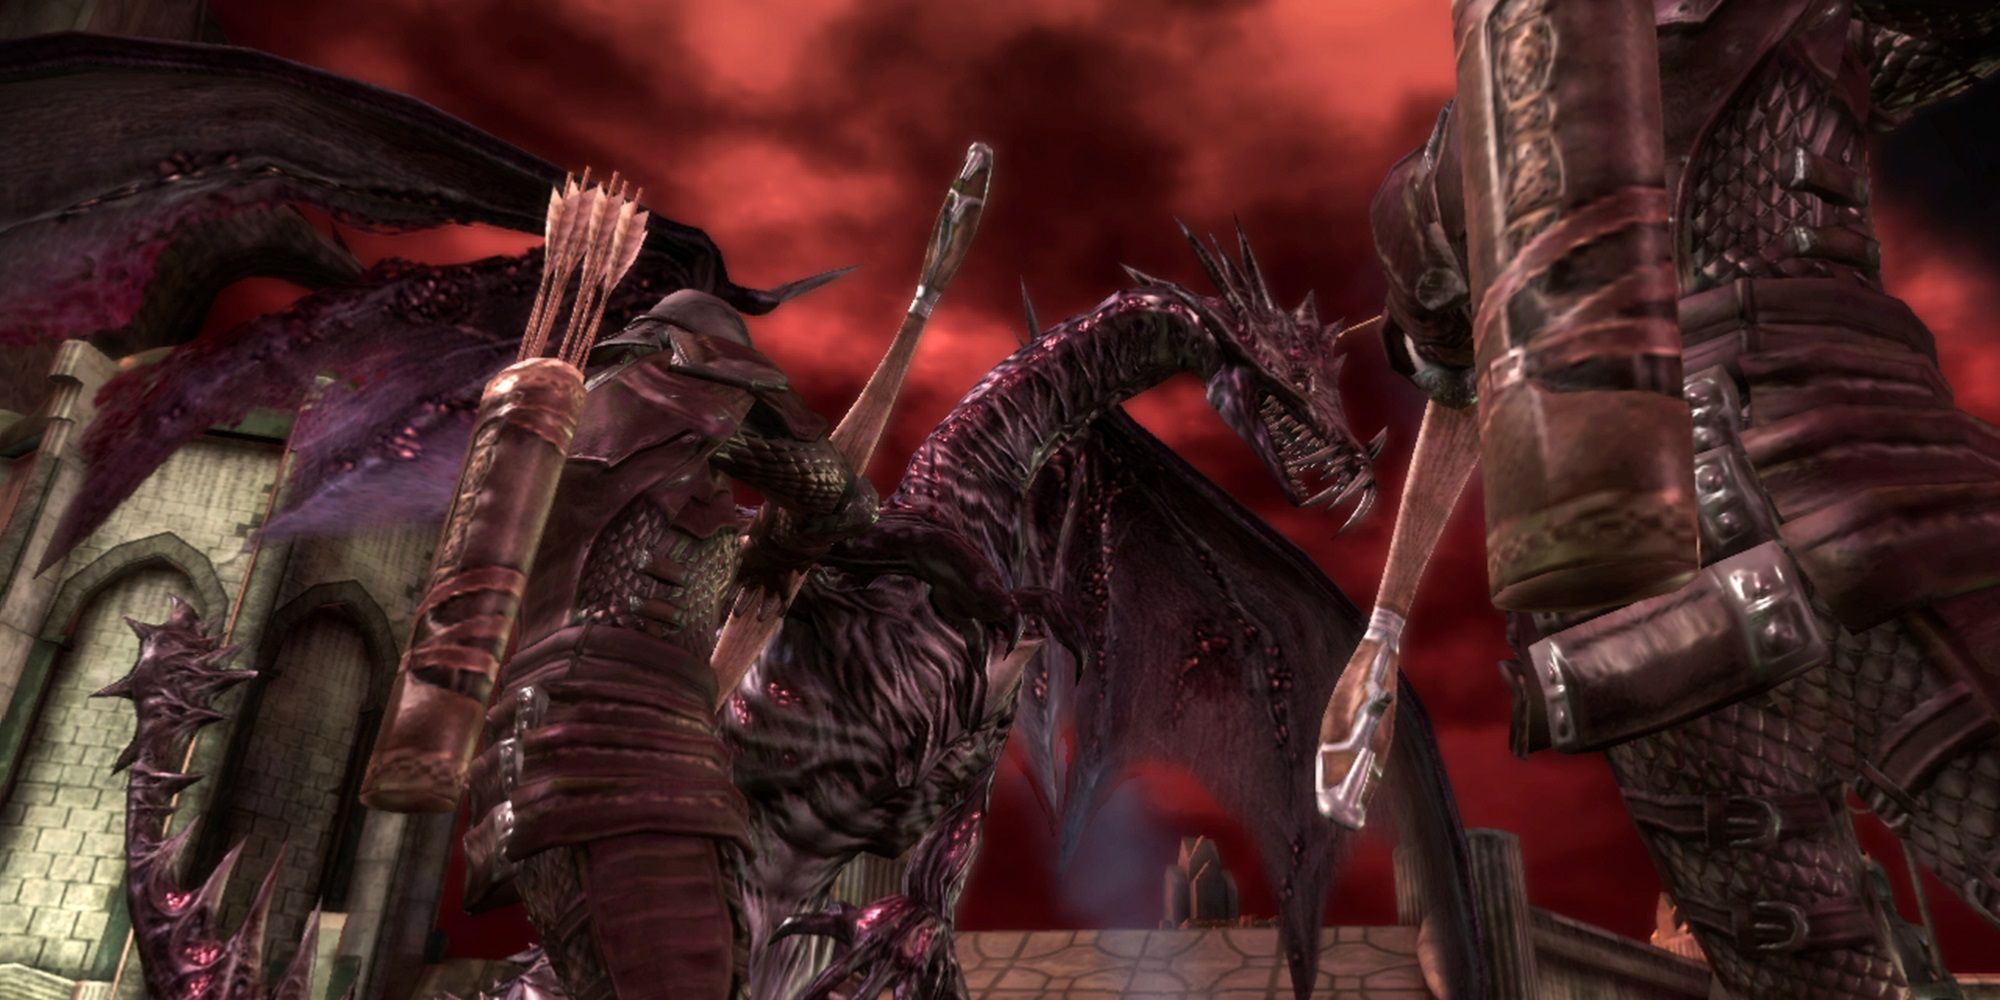 Dragon Age: Origins Desreves a Mass Effect Style Remaster